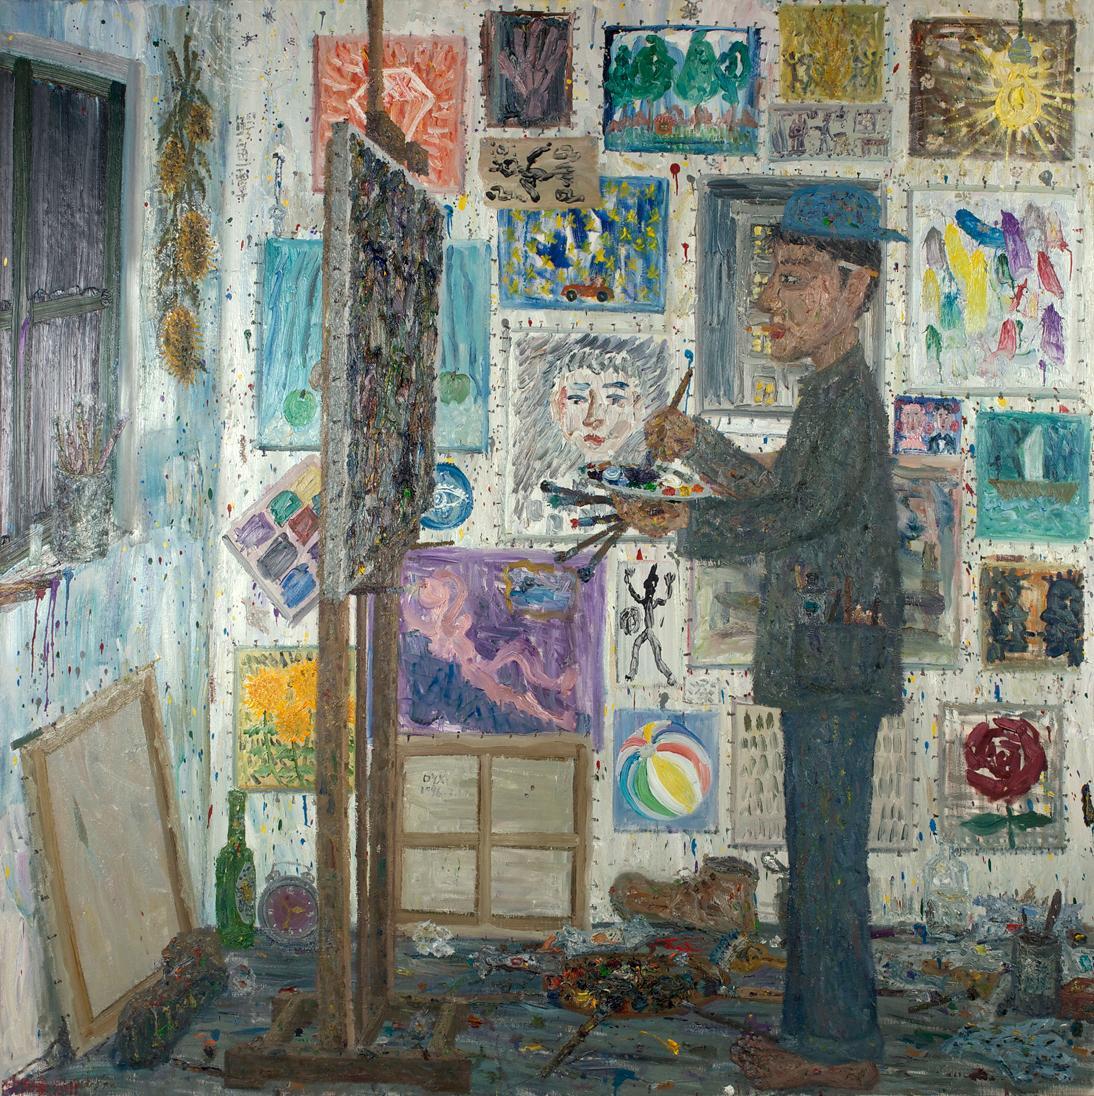 Ouyang Chun, A Studio, 2011, Öl auf Leinwand, 185 x 185 cm, Belvedere, Wien, Inv.-Nr. 10316